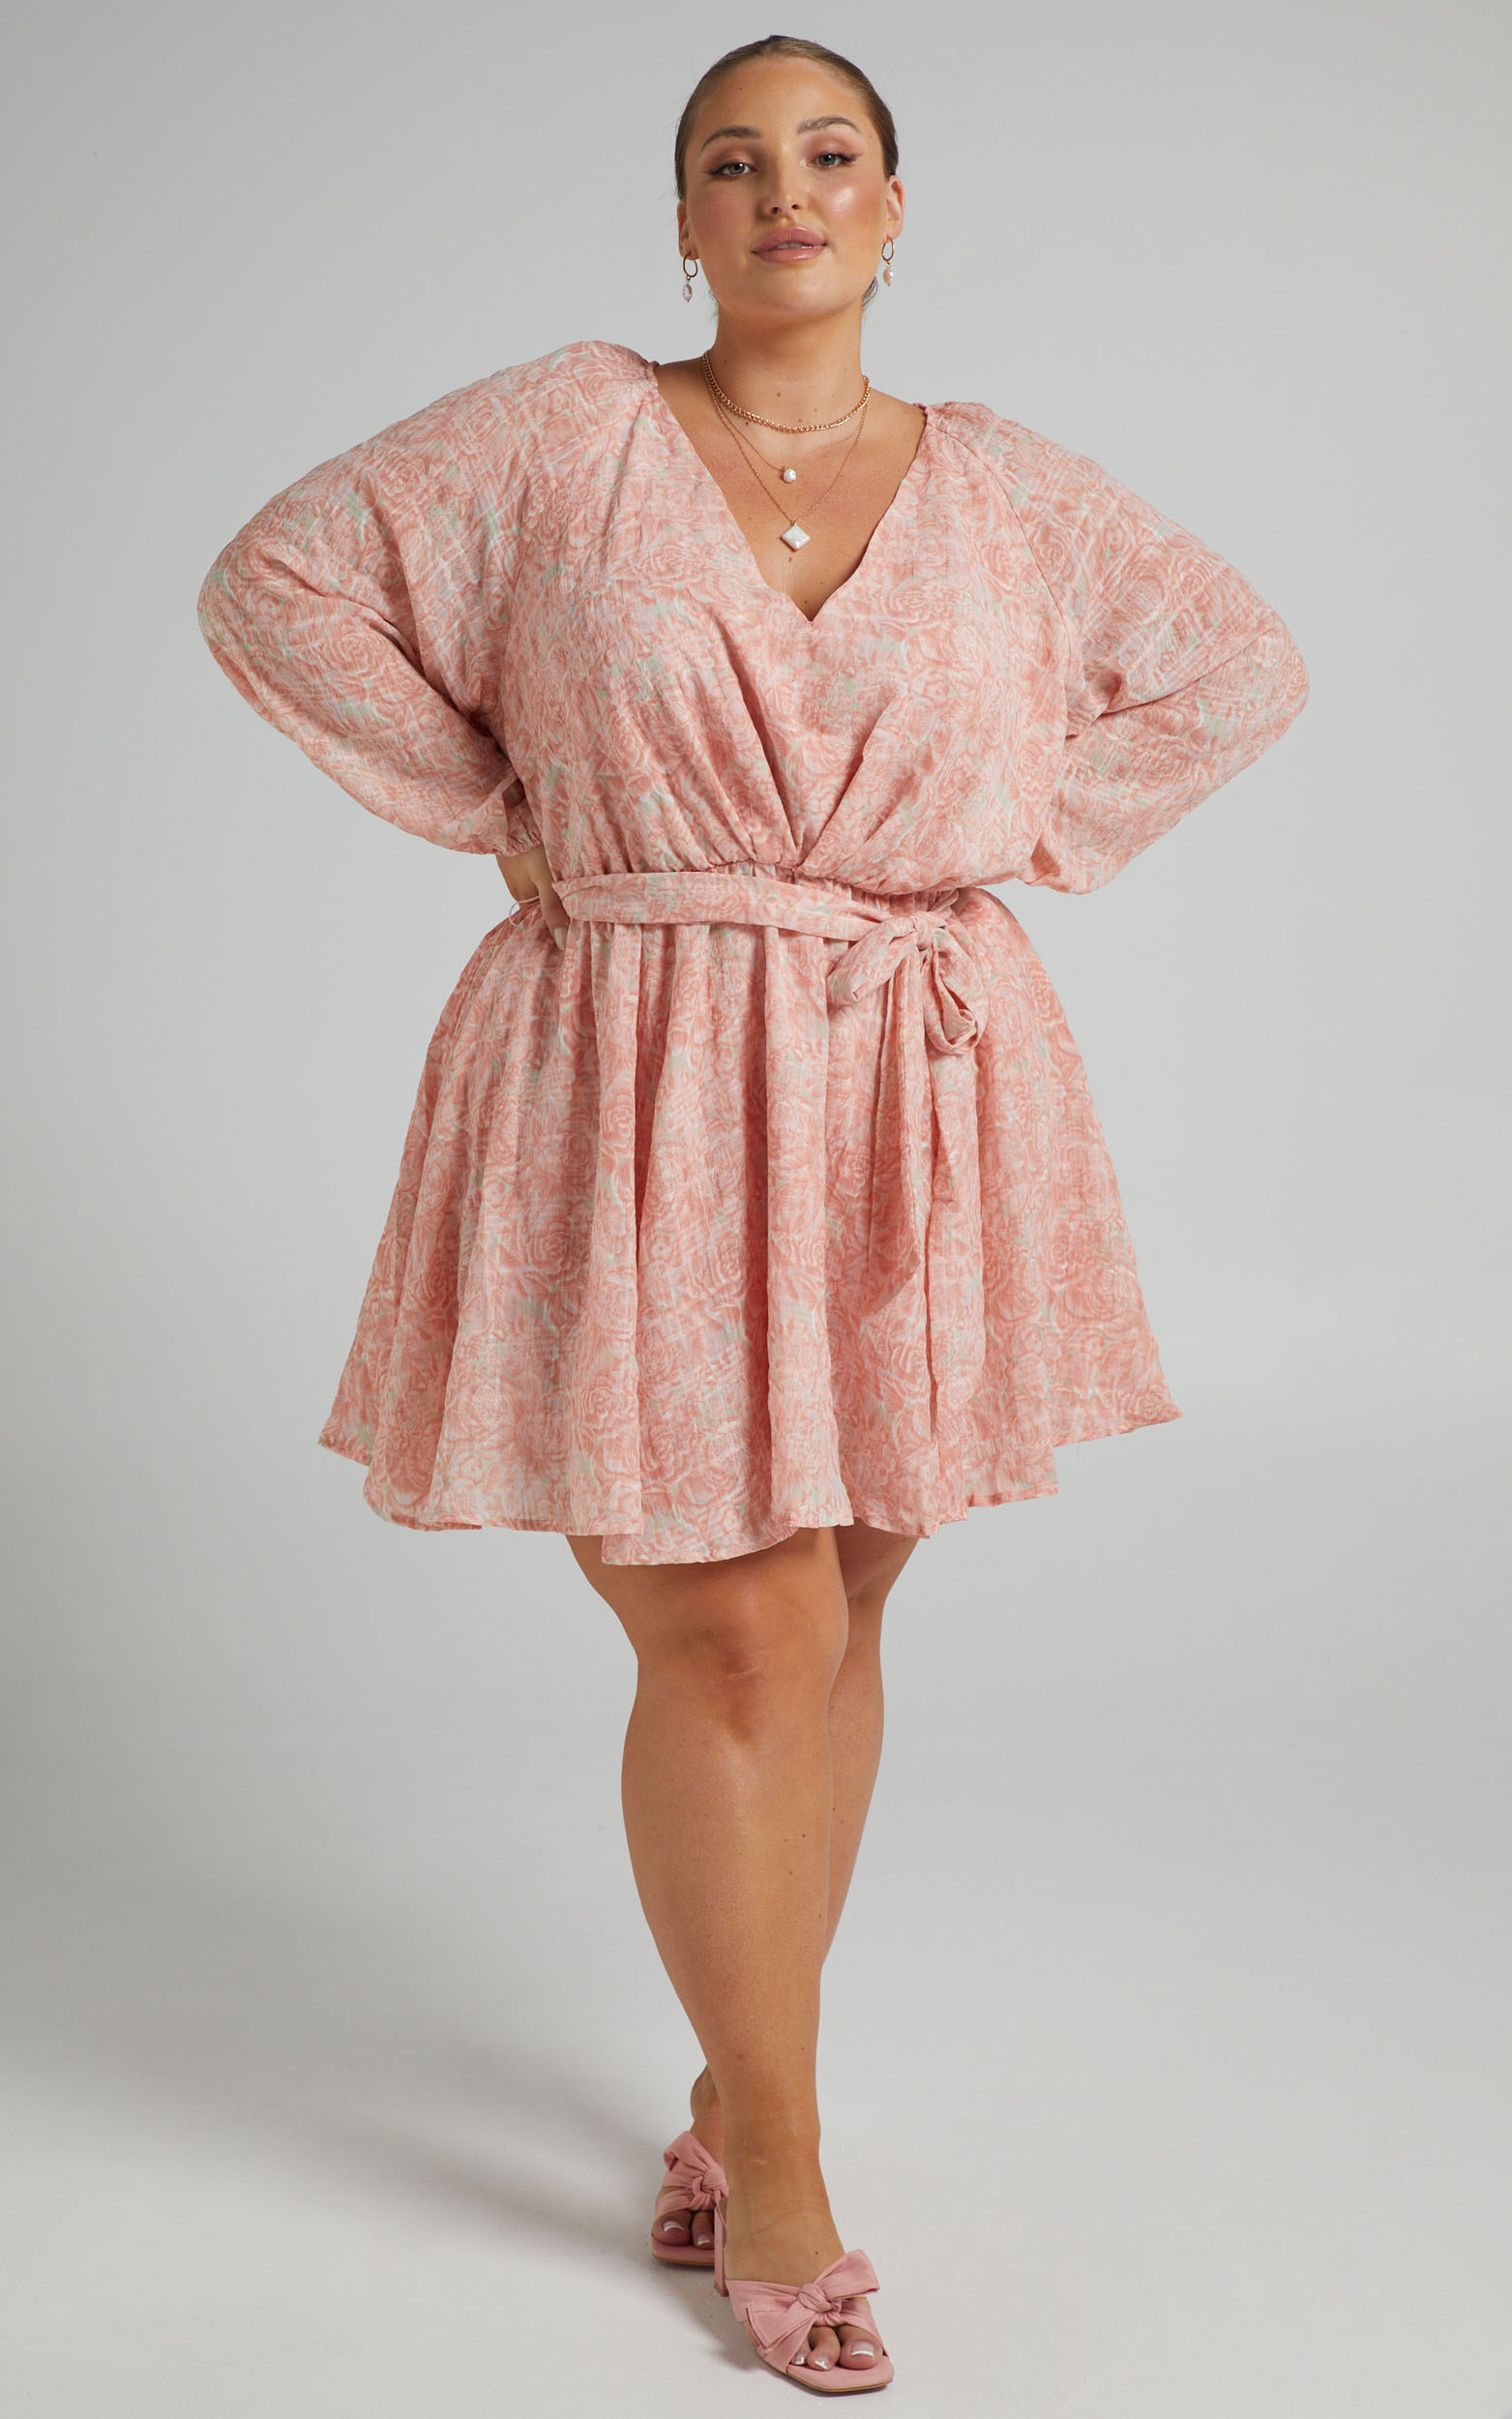 Raven Long Sleeve Mini Dress with Belt in Pink Floral - 04, PNK1, hi-res image number null